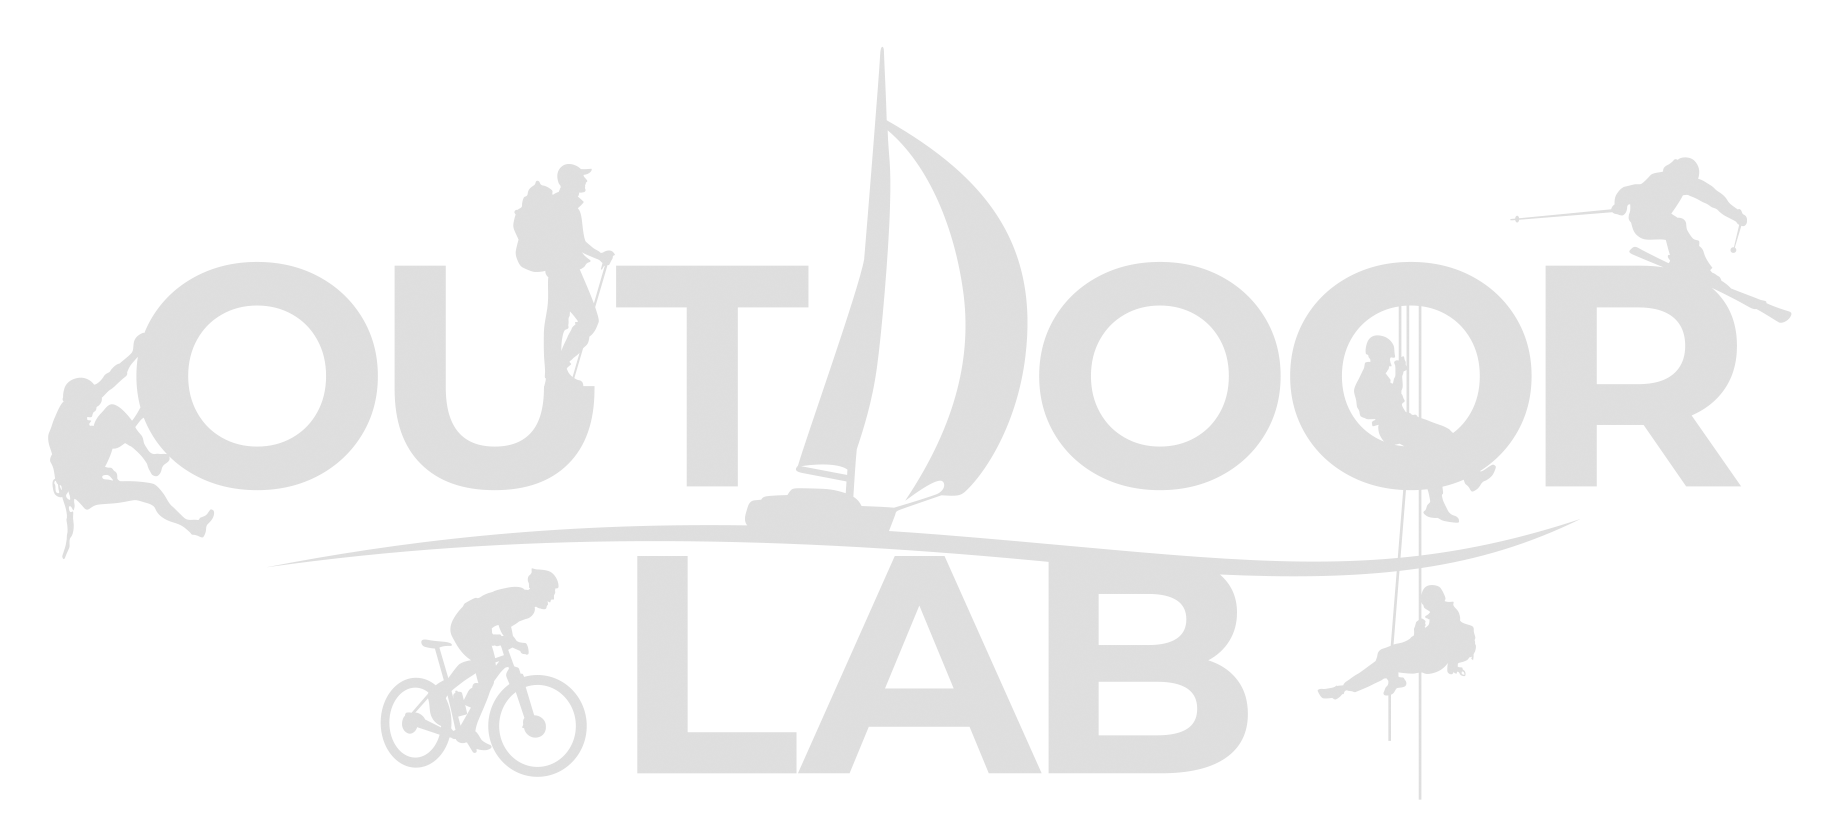 Outdoorlab